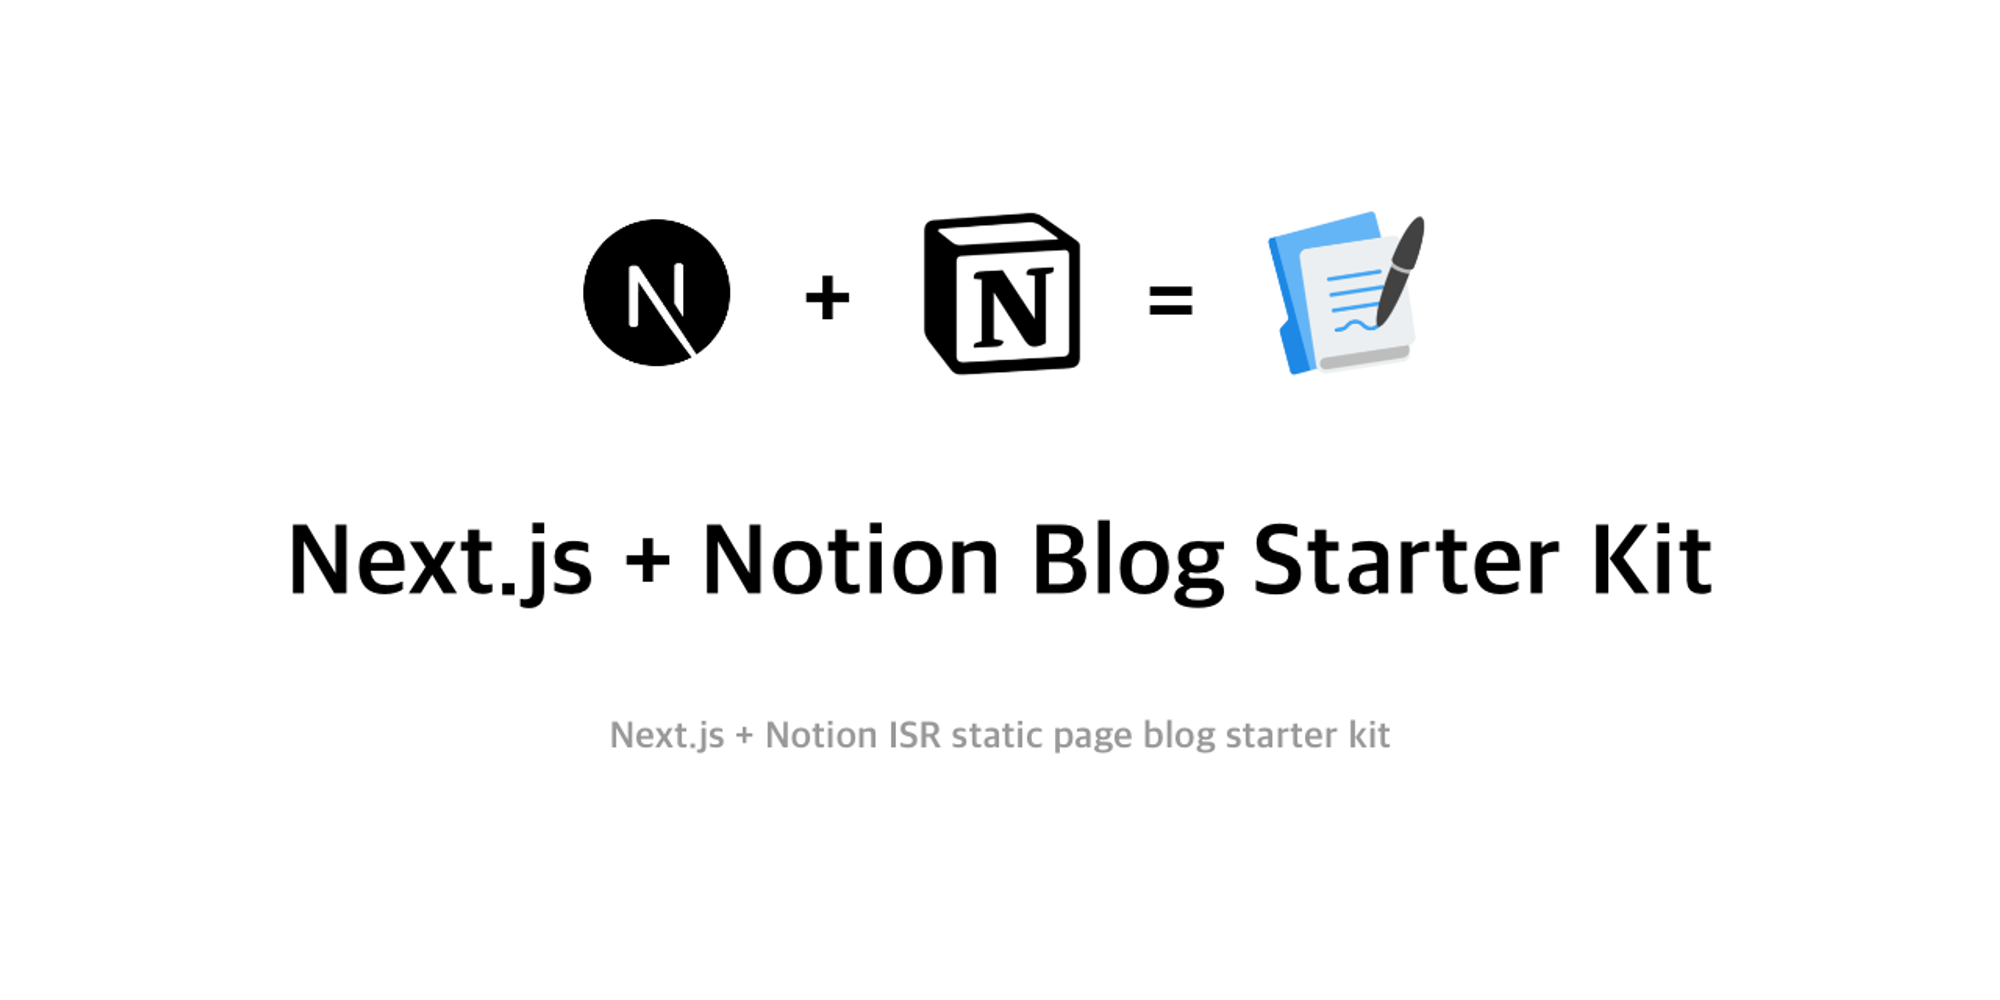 GitHub - 2skydev/Notion-Next.js-blog-starter-kit: Notion + Next.js Blog Starter Kit - Next.js + Notion ISR static page blog starter kit